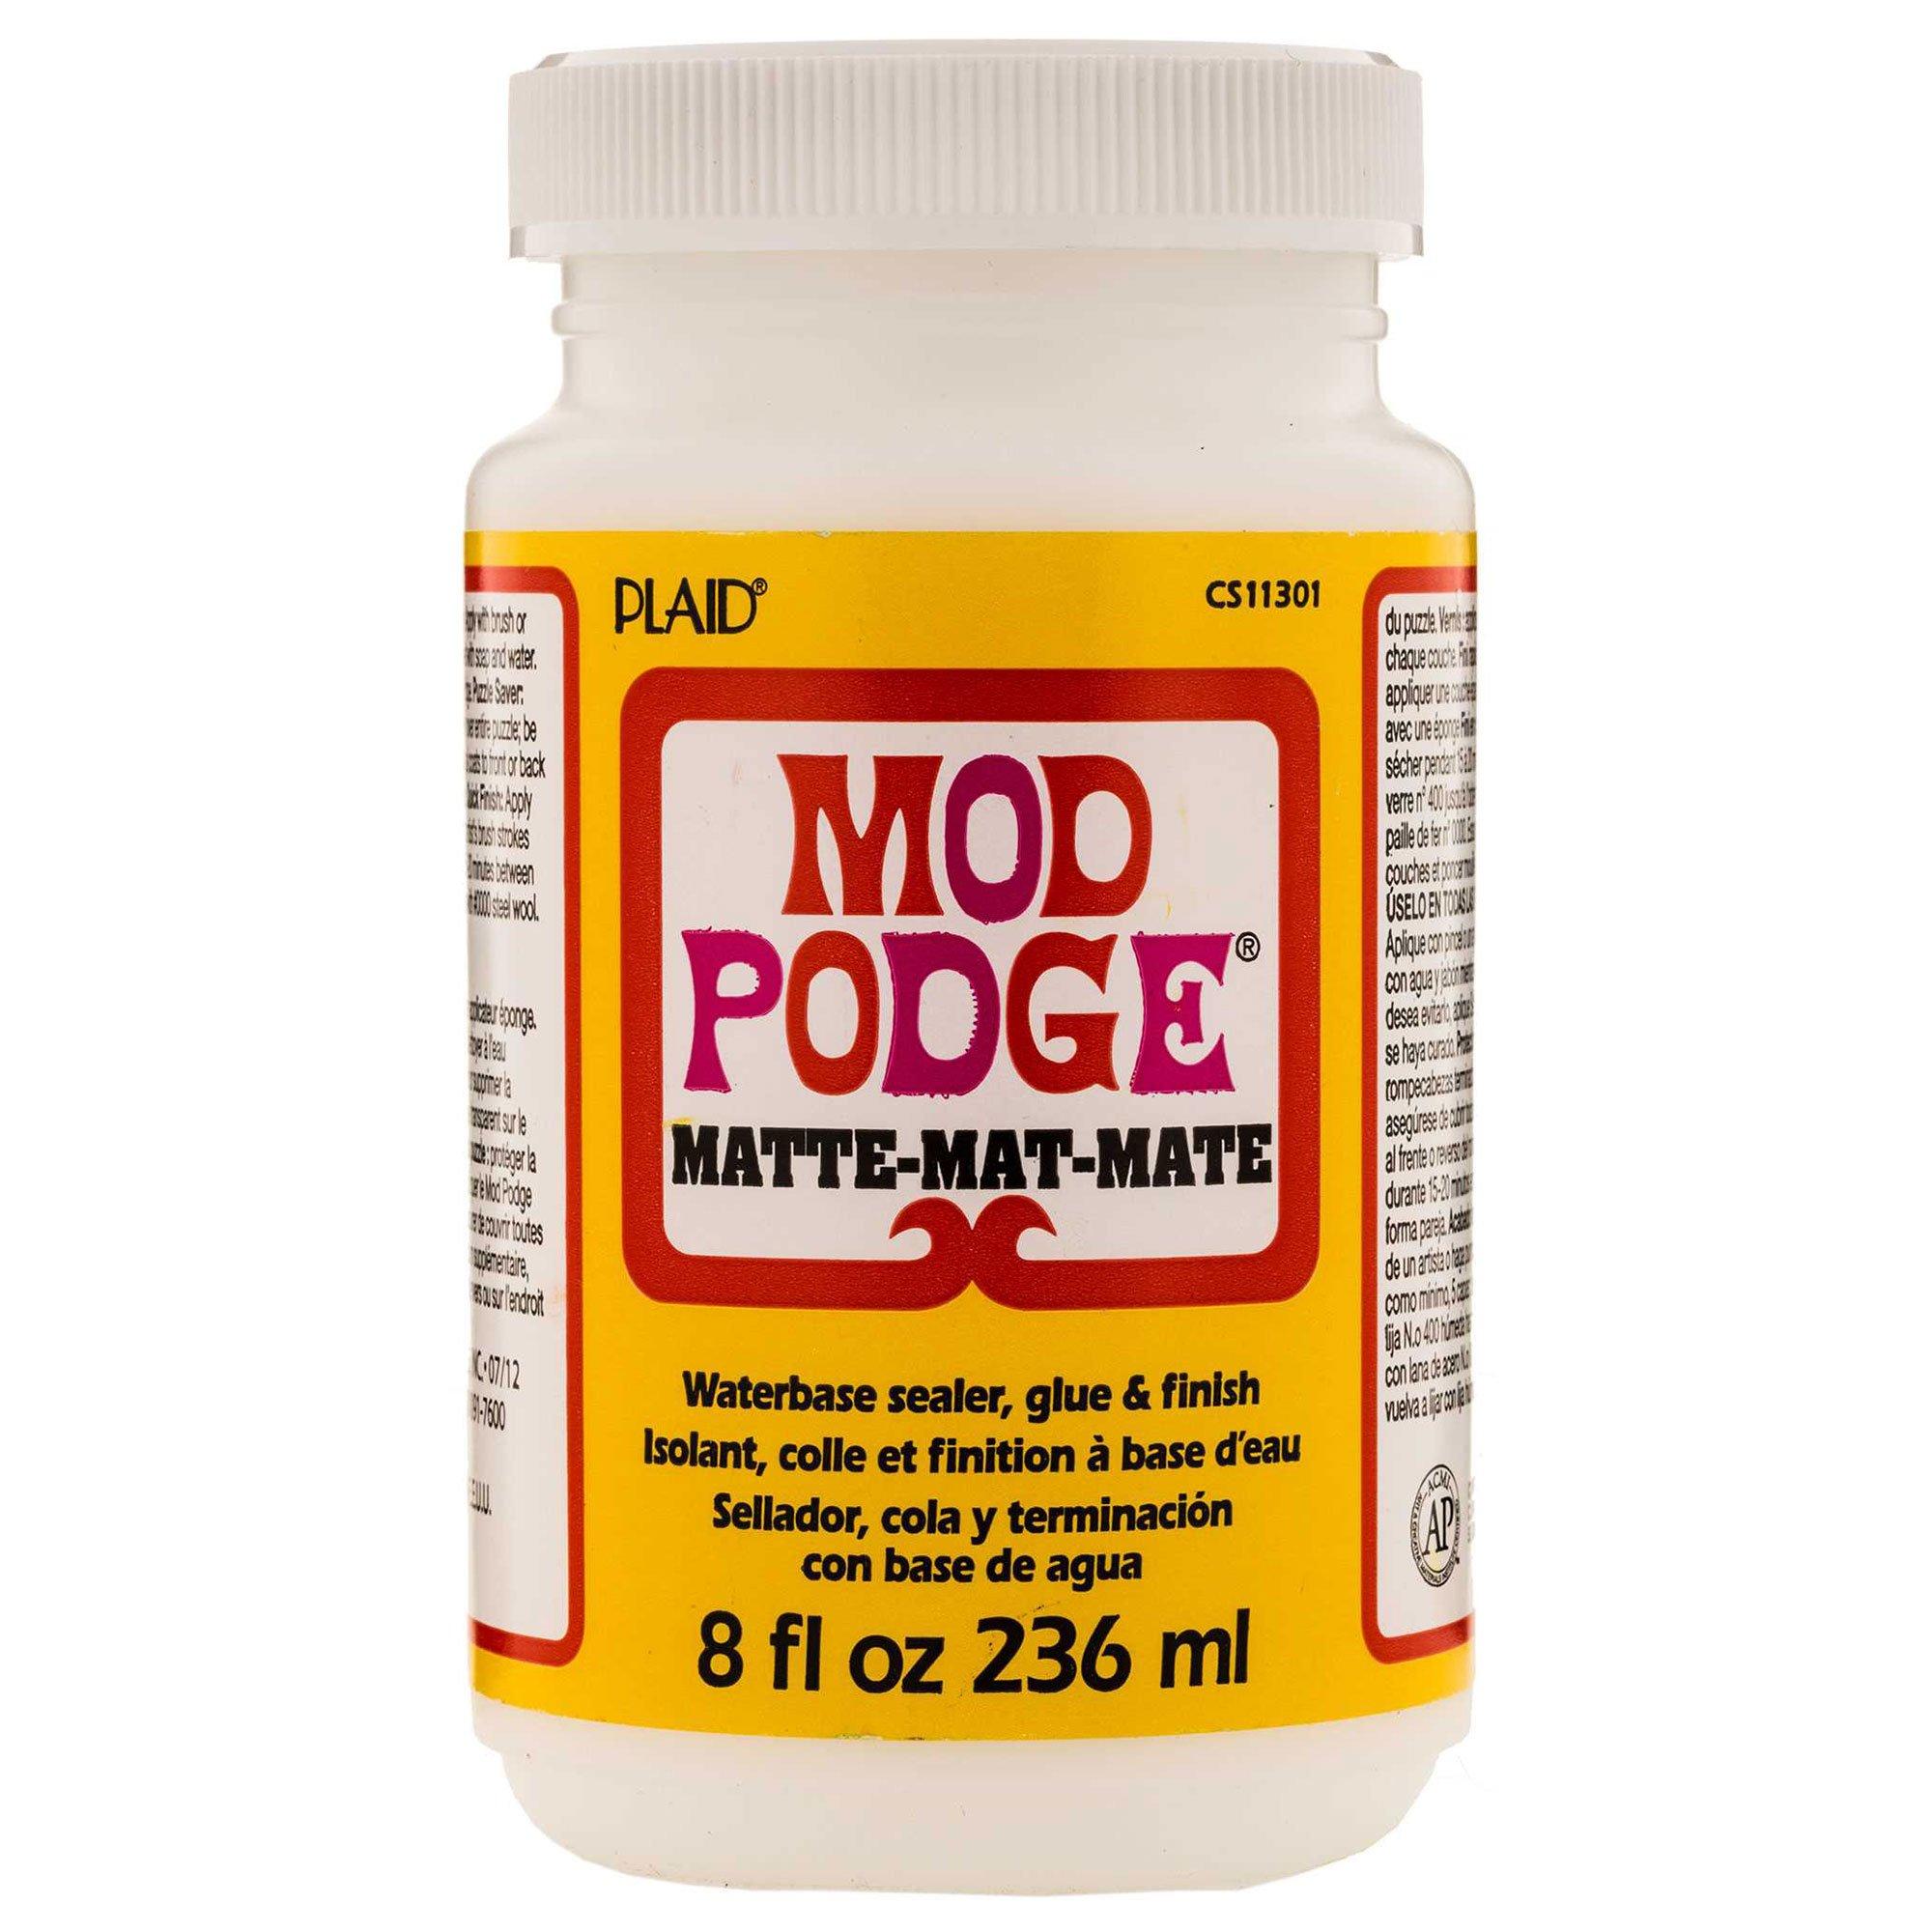 Mod Podge Photo Transfer Medium, 2oz - The Art Store/Commercial Art Supply